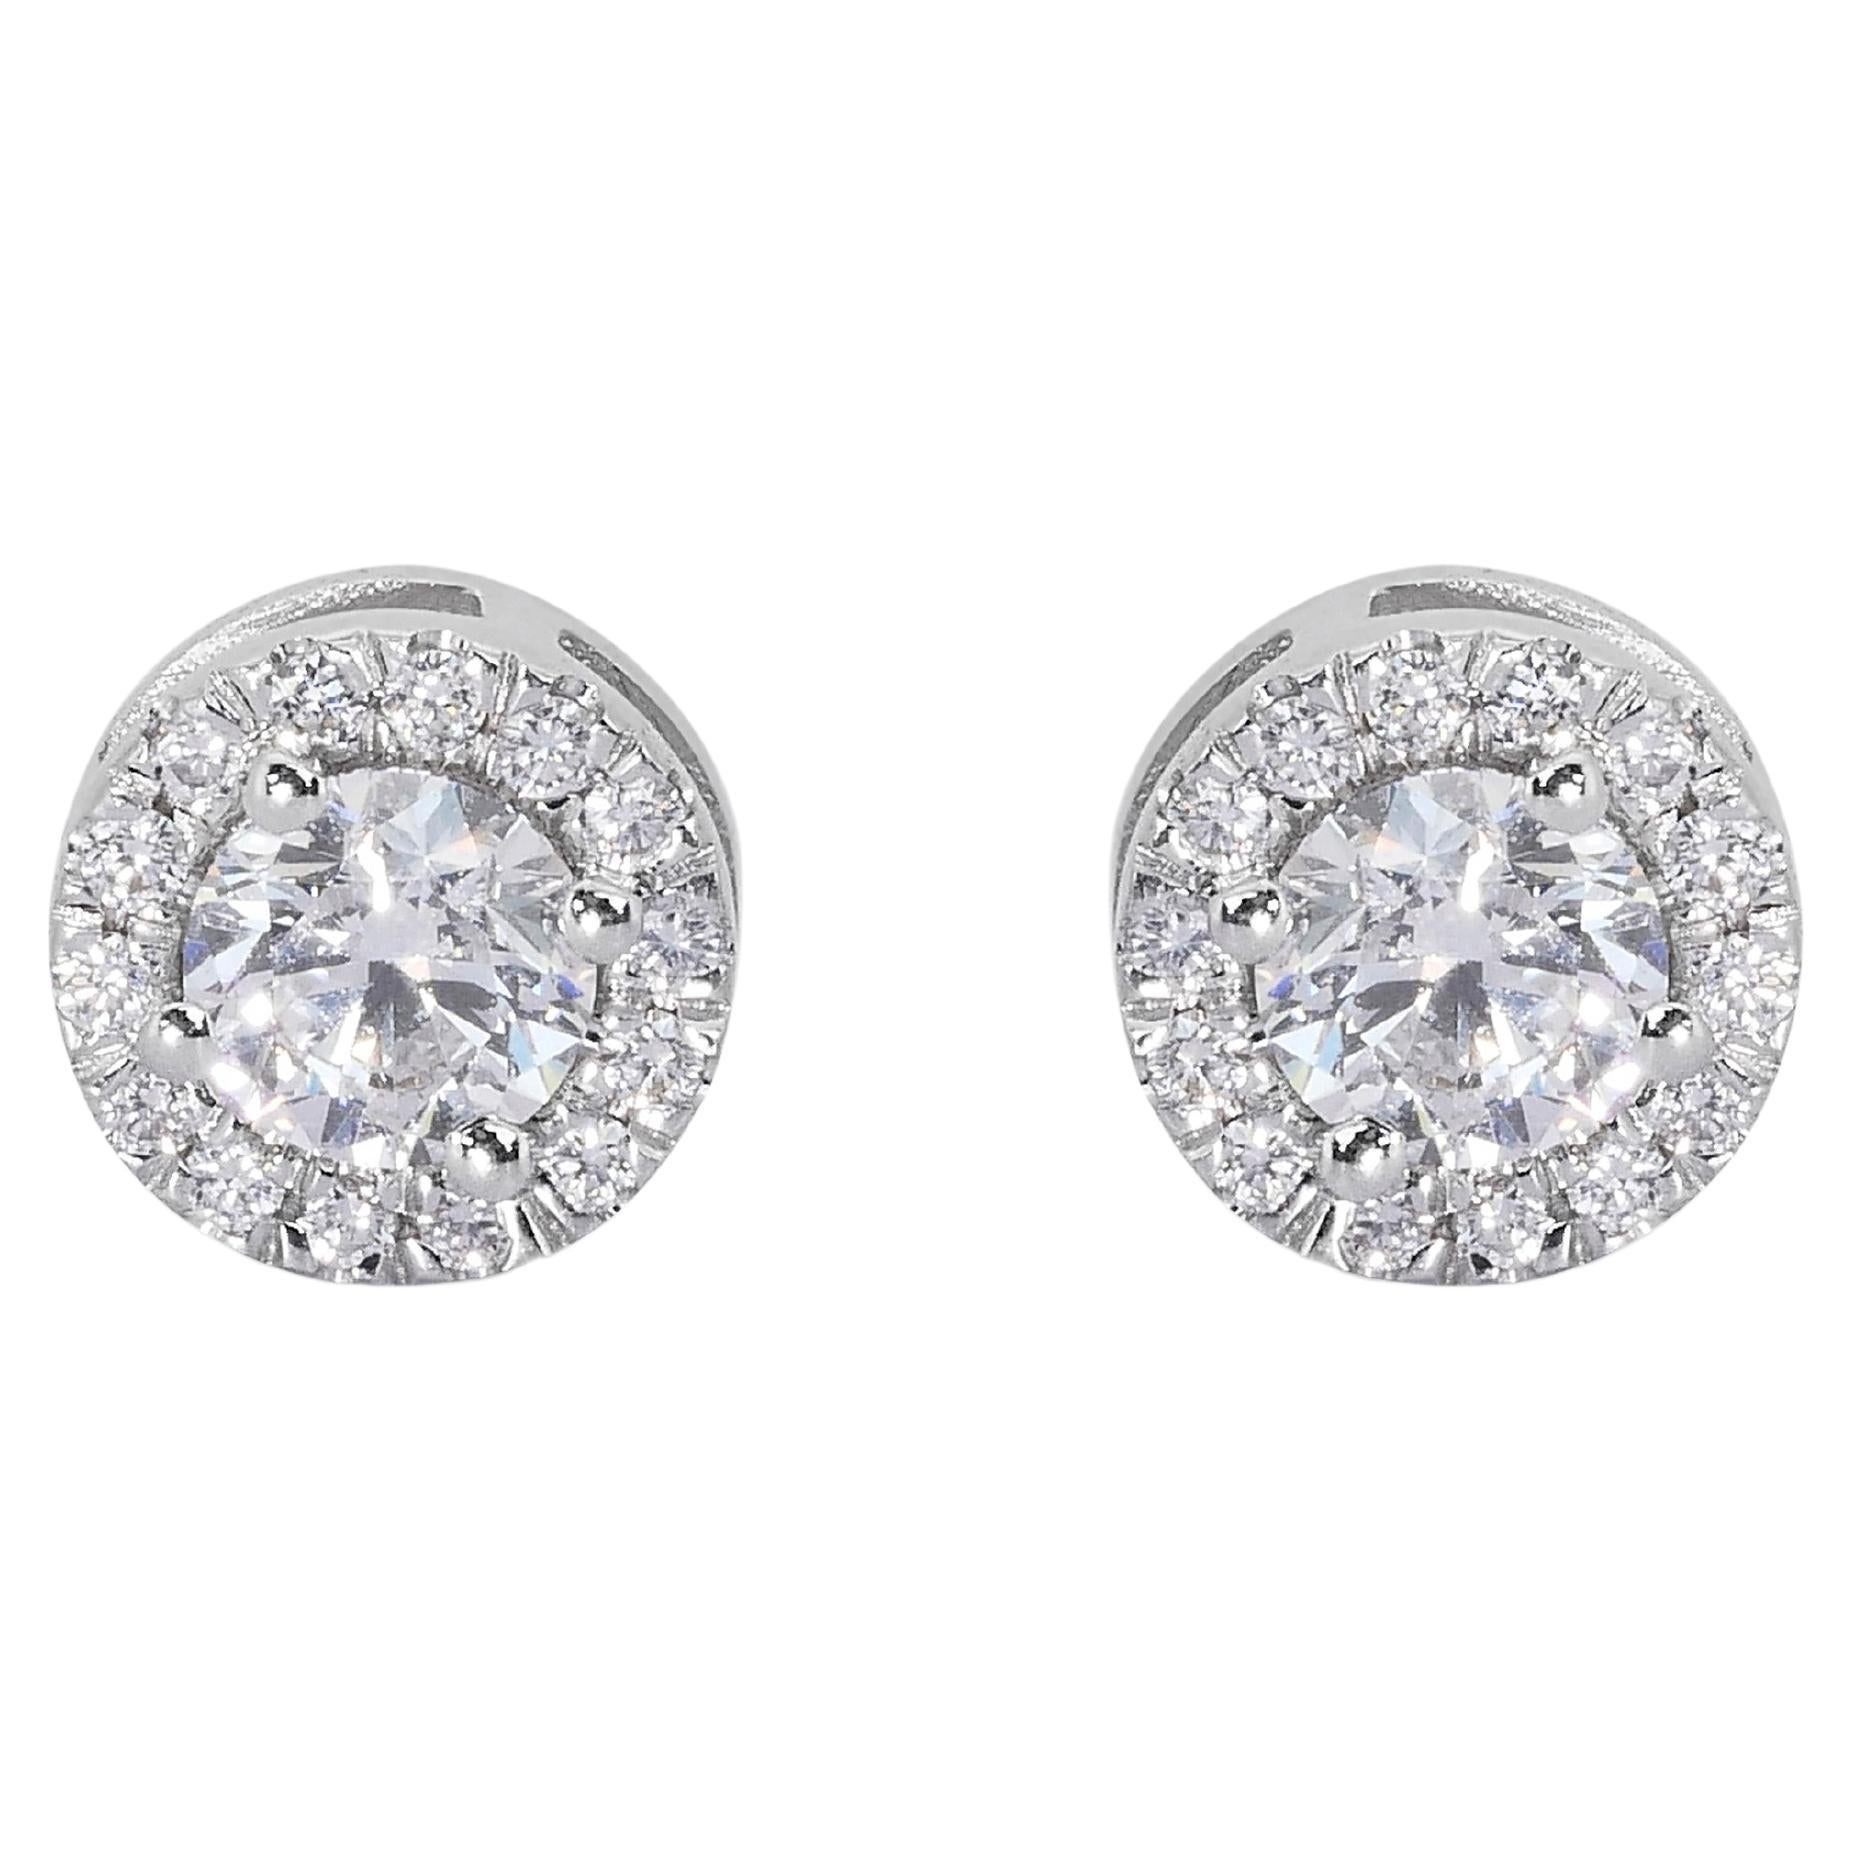 Glamorous 18k White Gold Halo Earrings w/ 1.05 Carat Natural Diamonds GIA Cert For Sale